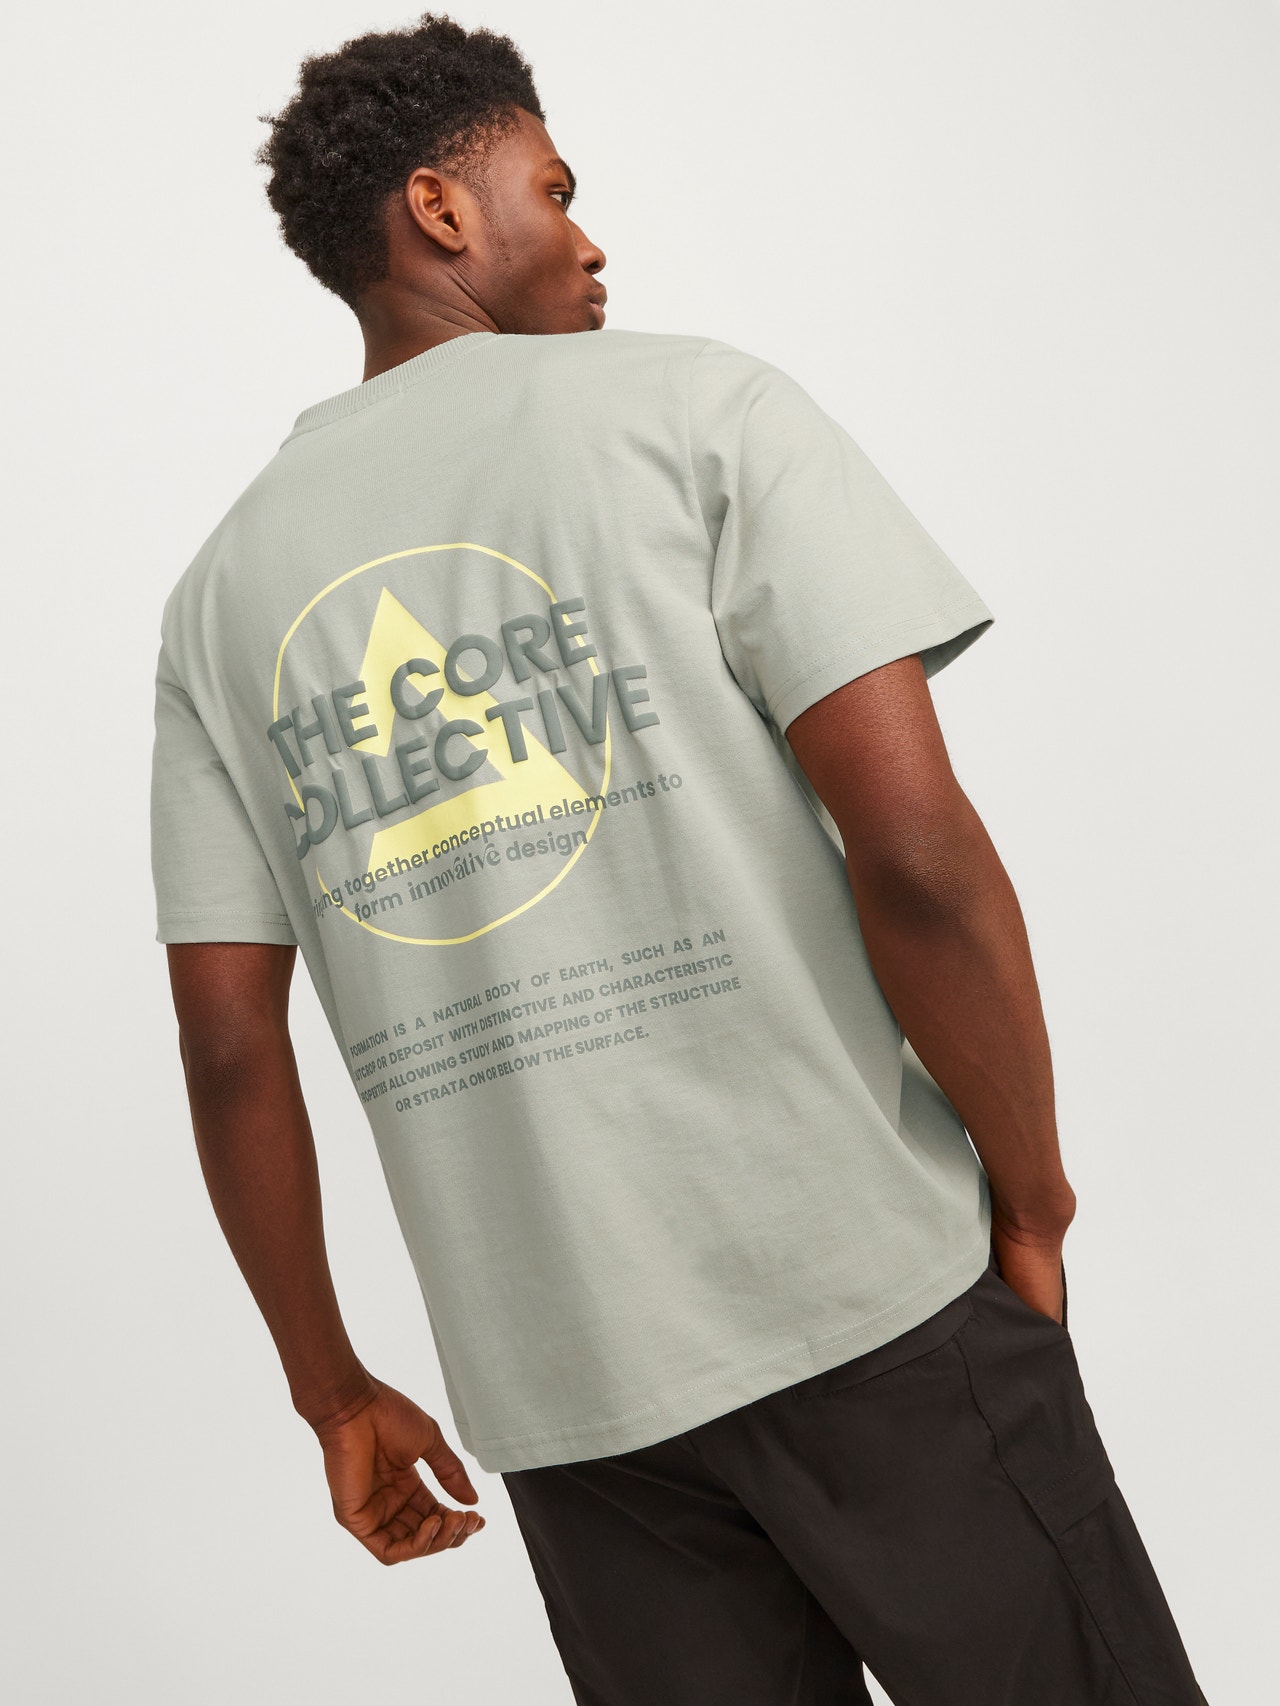 Jack & Jones Printet Crew neck T-shirt -Desert Sage - 12256407